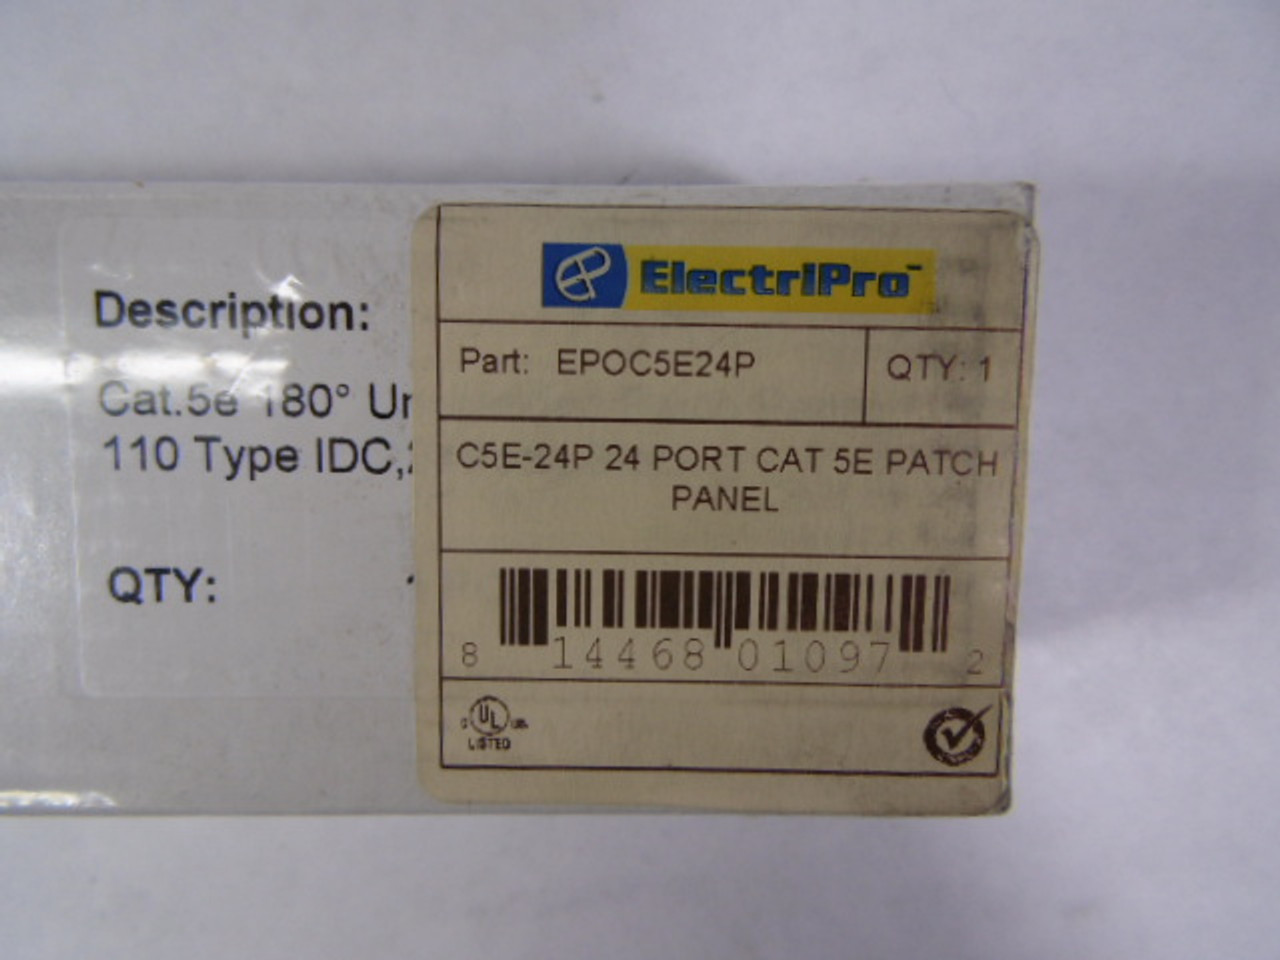 ElectriPro EPOC5E24P Patch Panel 24-Port Cat 5e Sealed Box SHELF WEAR NEW